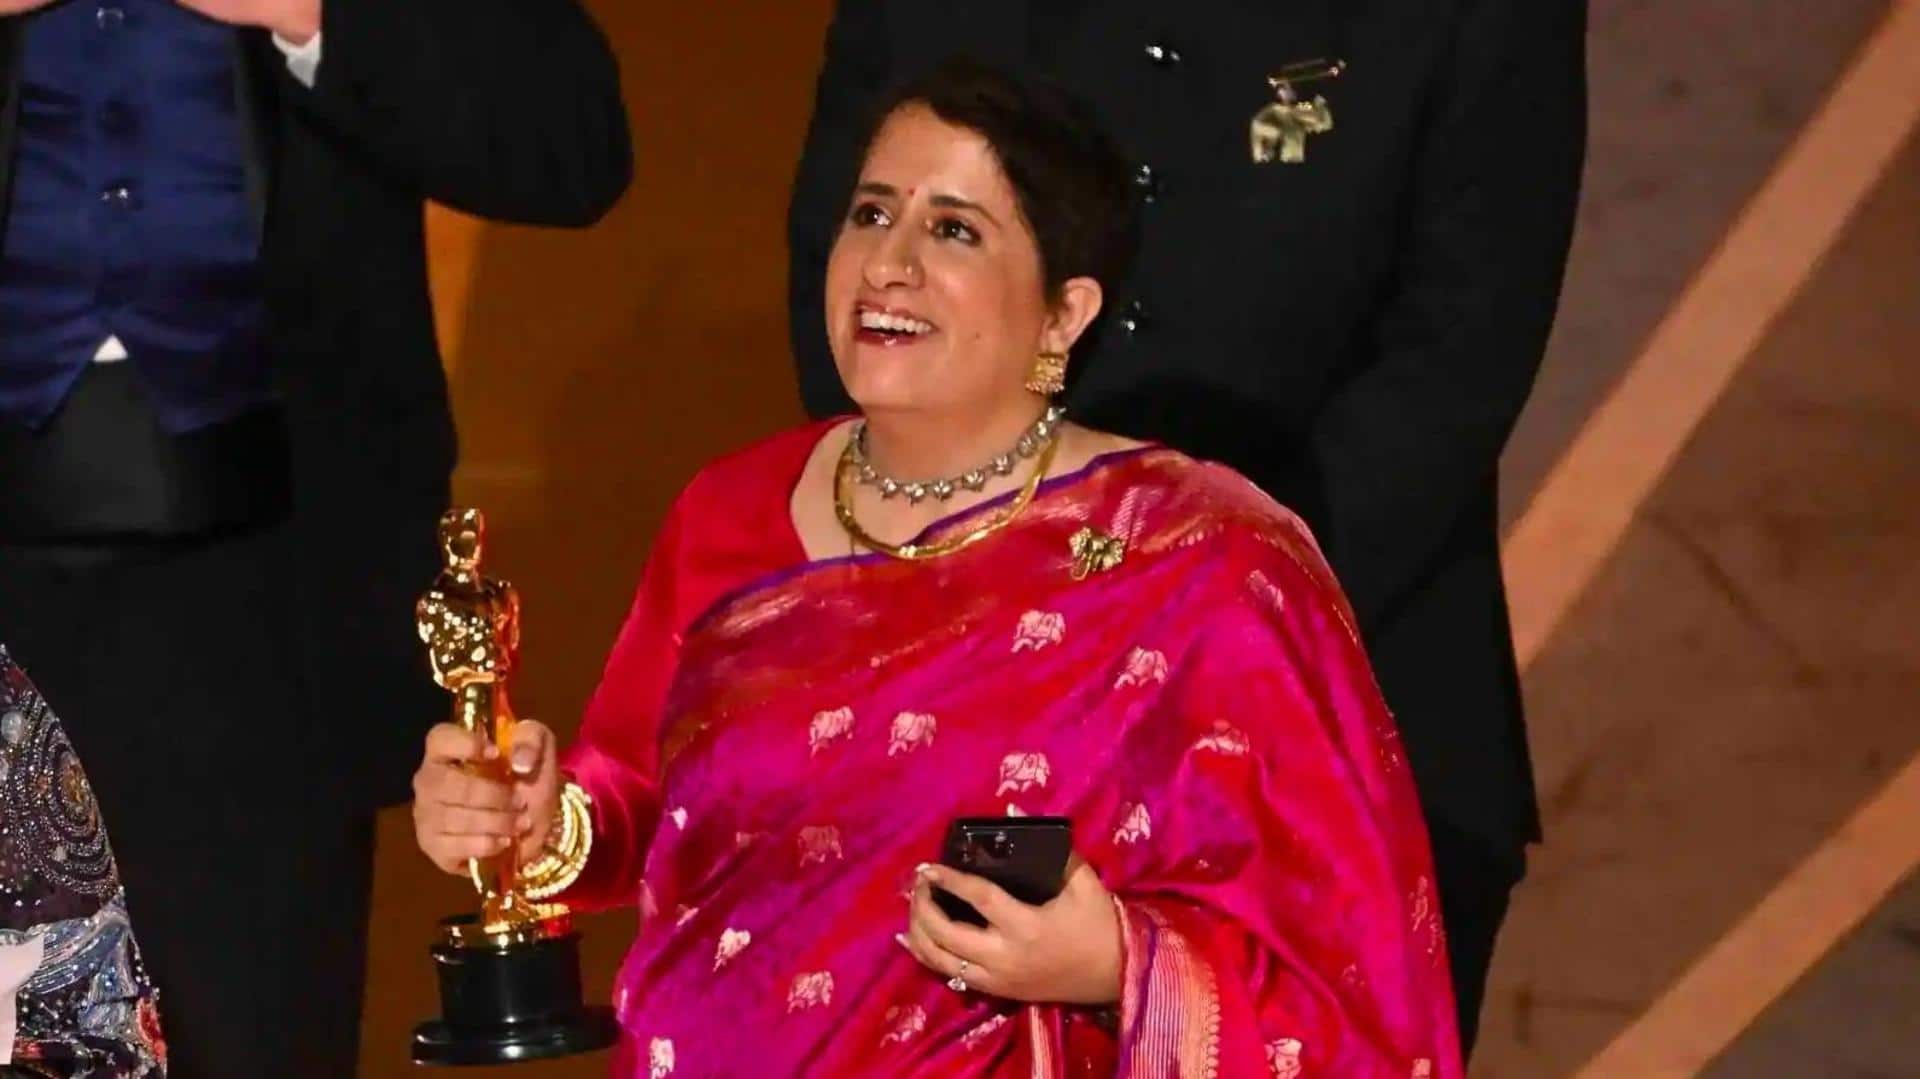 Guneet Monga was hospitalized after Oscars victory, reveals MM Keeravani